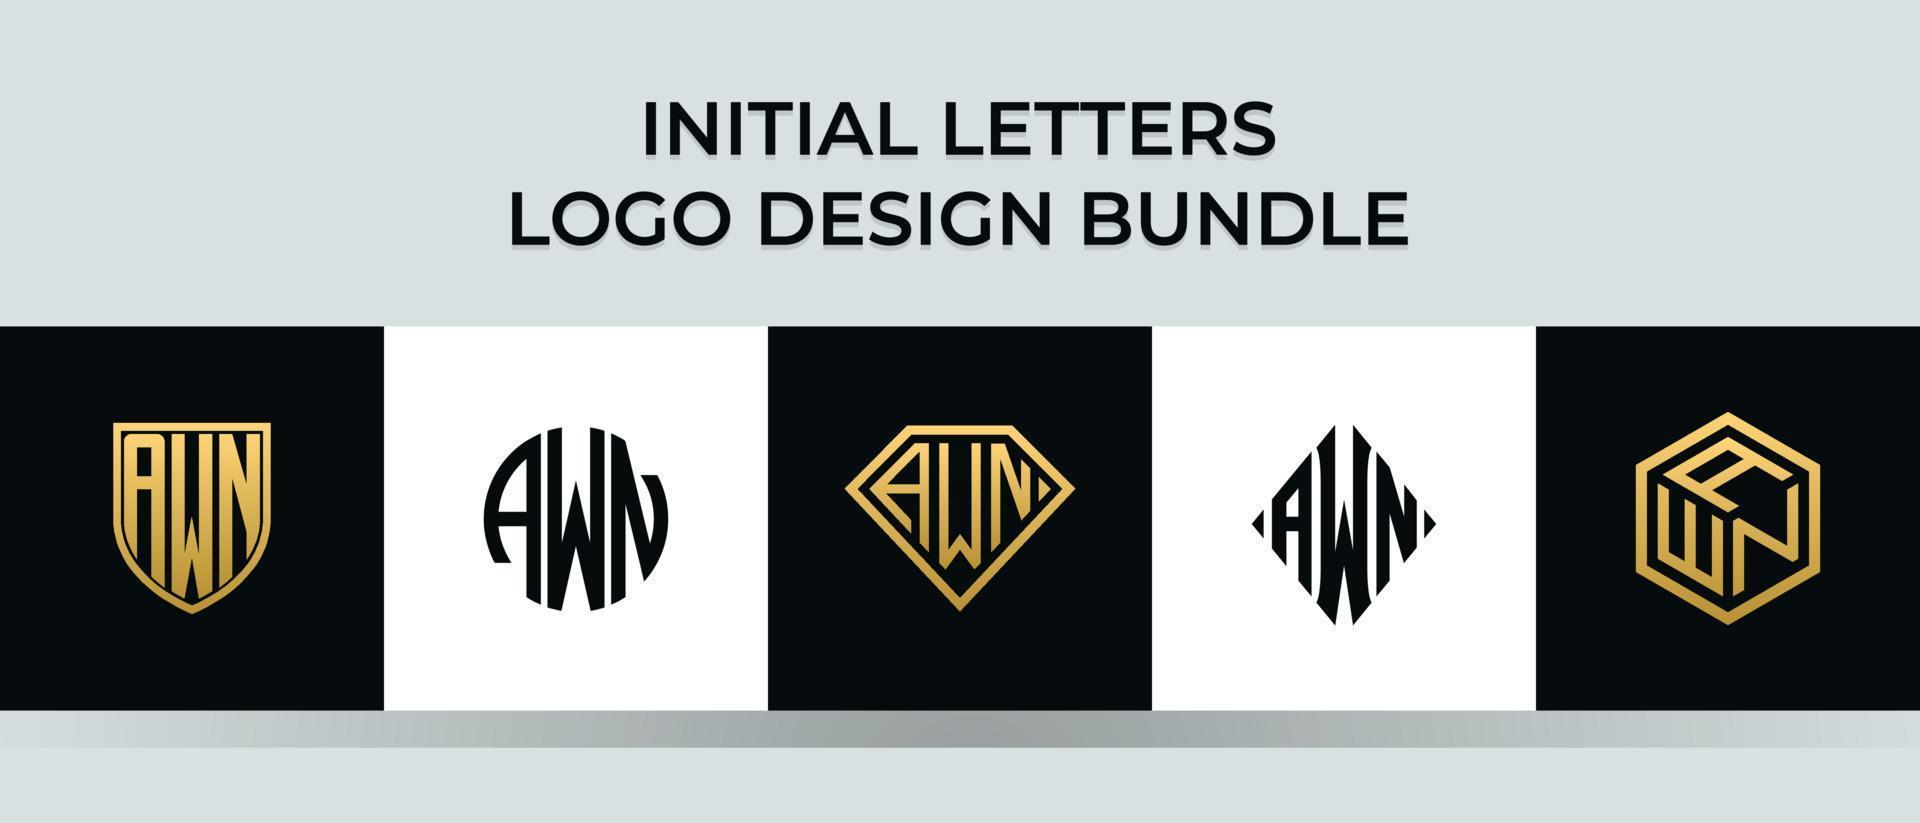 beginletters awn logo ontwerpen bundel vector